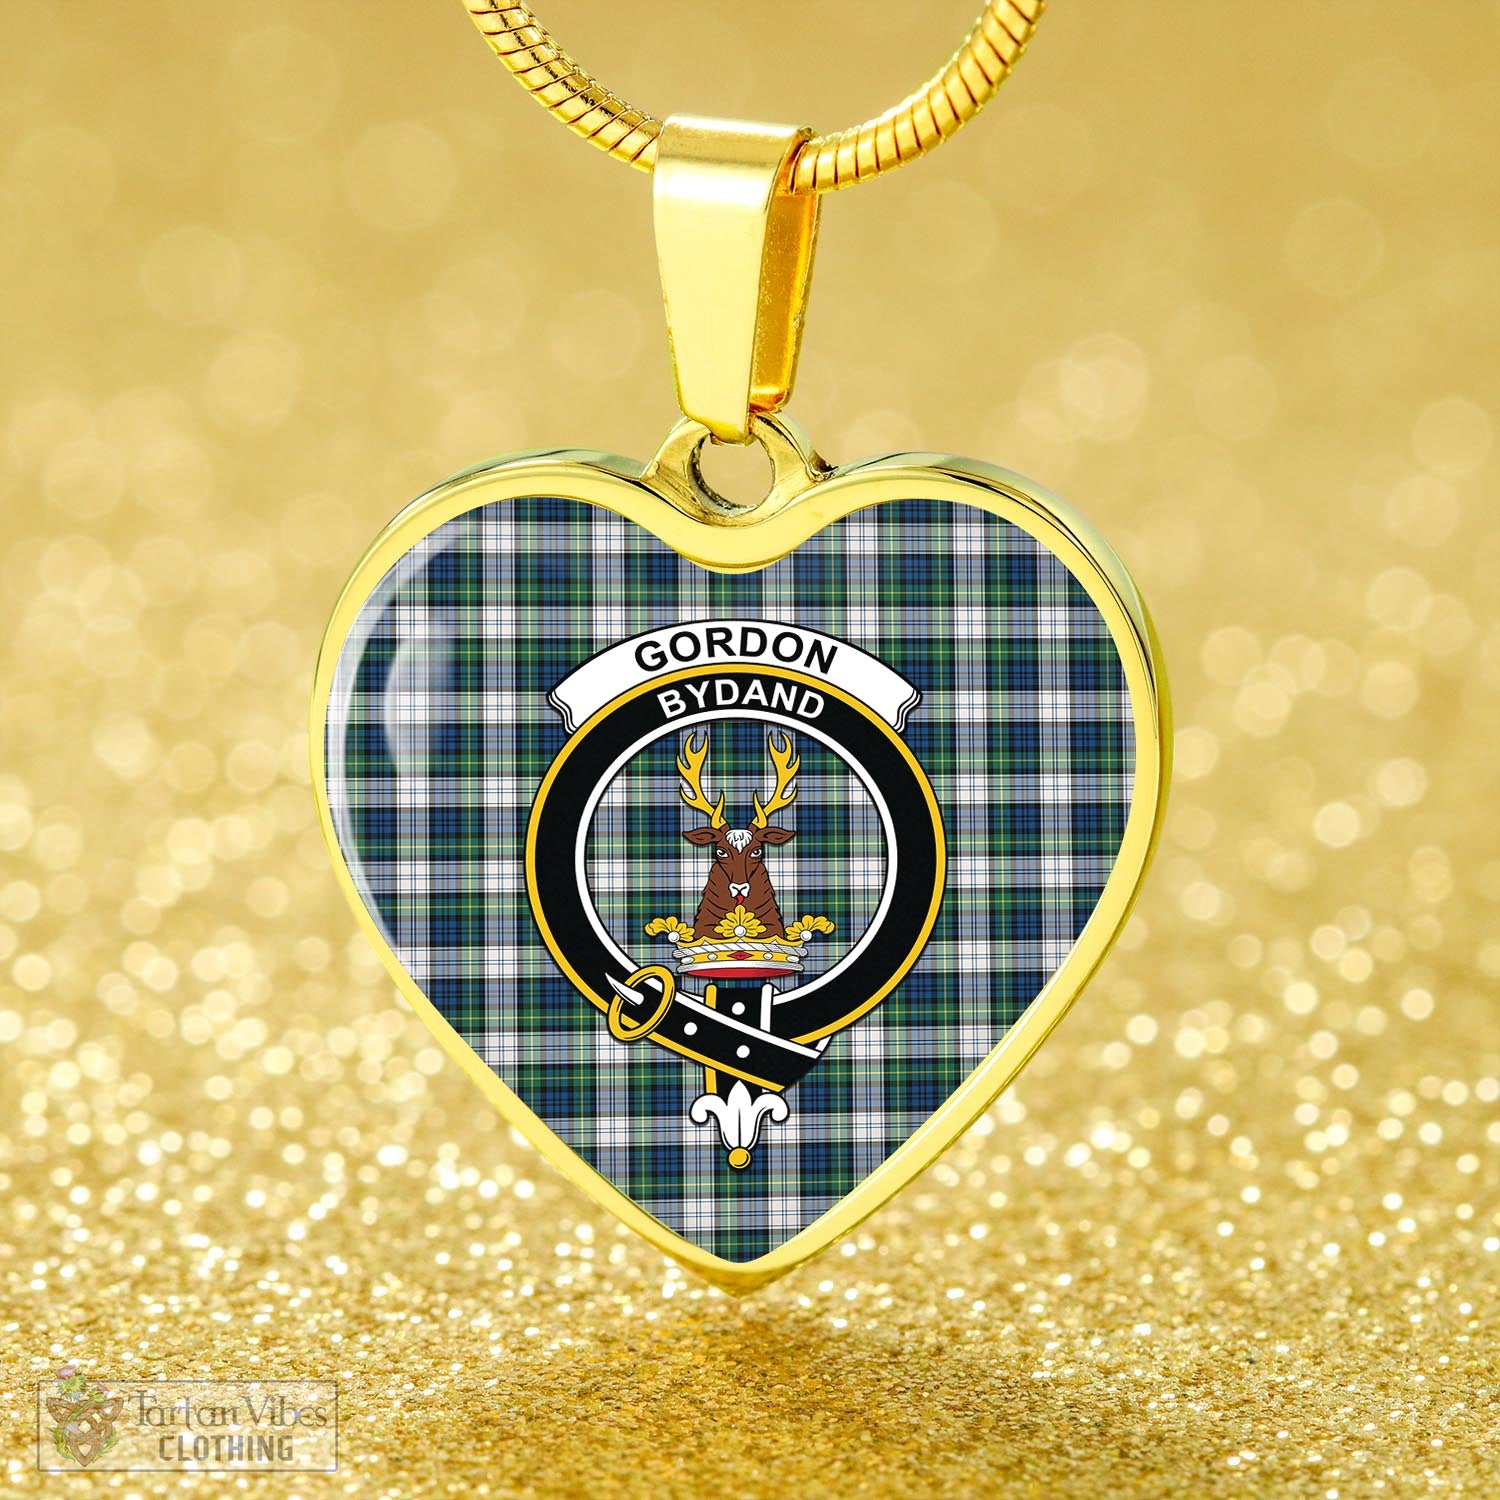 Tartan Vibes Clothing Gordon Dress Ancient Tartan Heart Necklace with Family Crest